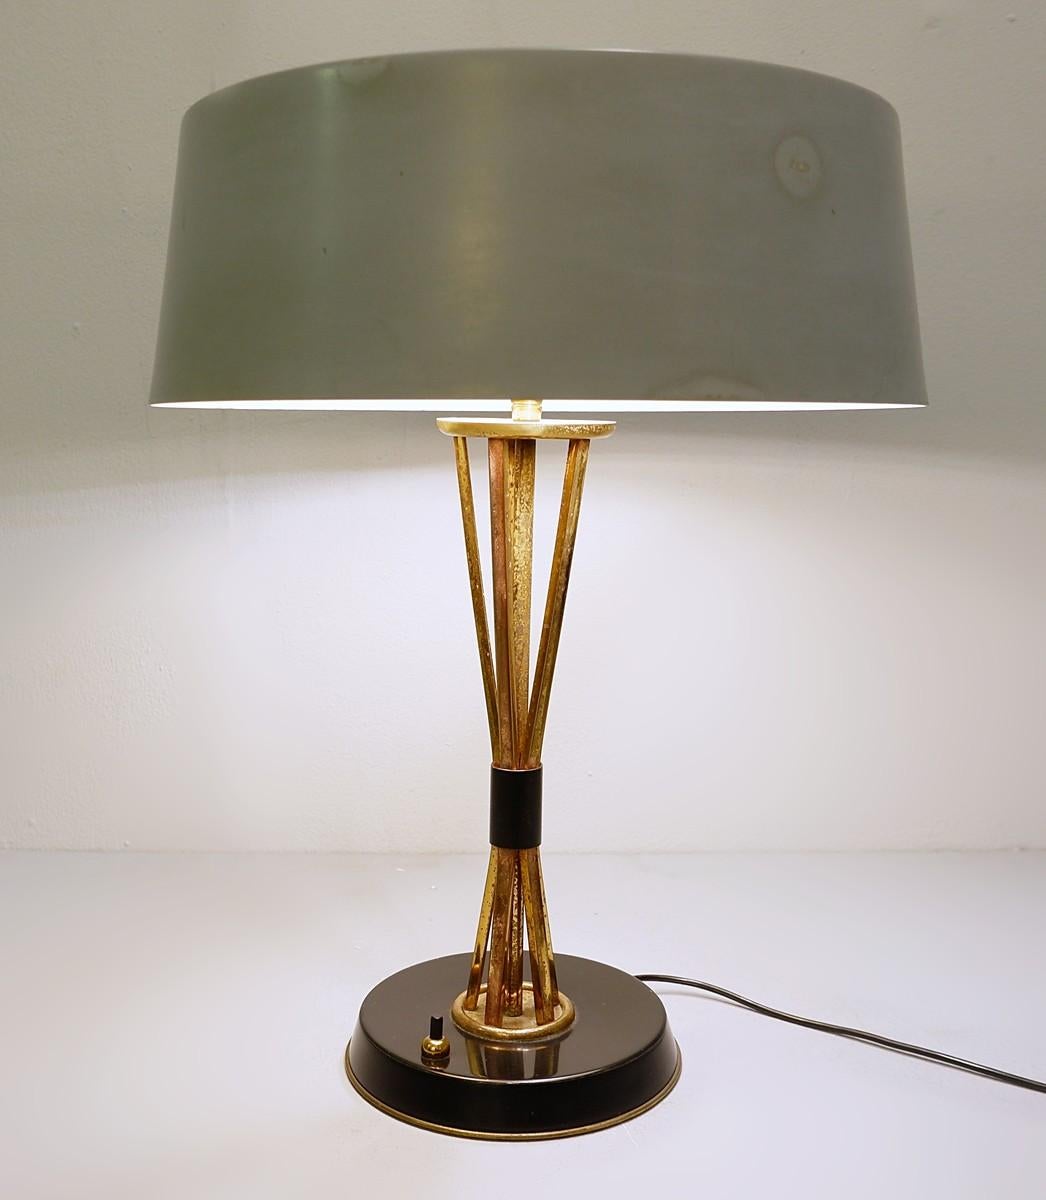 Oscar Torlasco for Lumi table lamp (Model 476), 1950s.